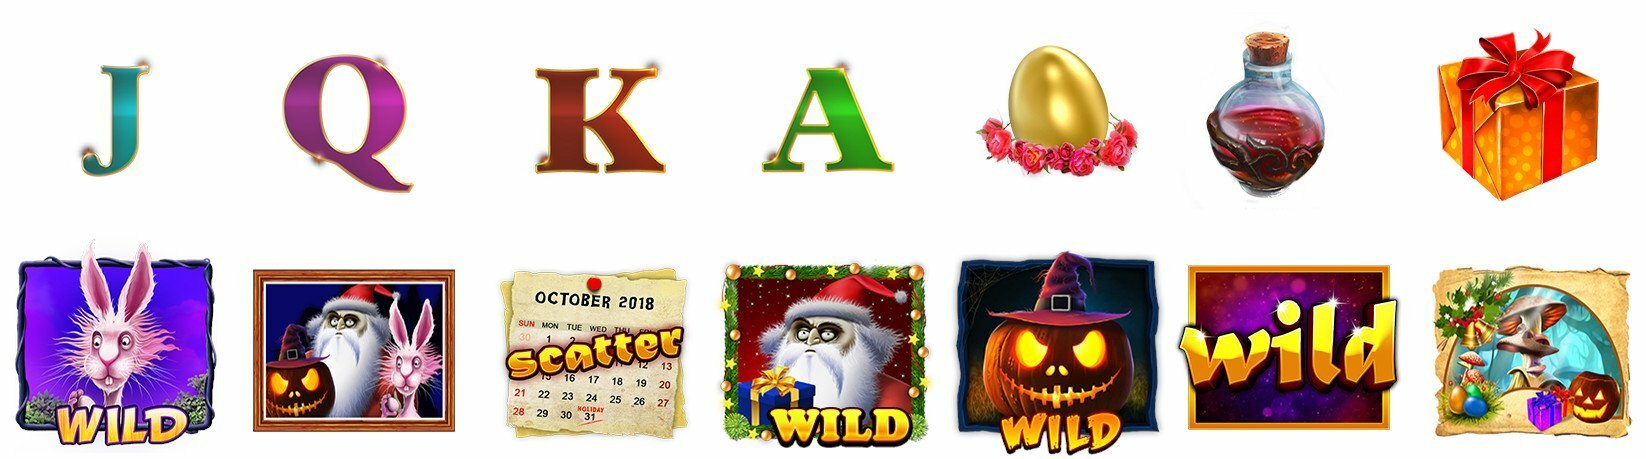 Season greetings symbols in the casino game